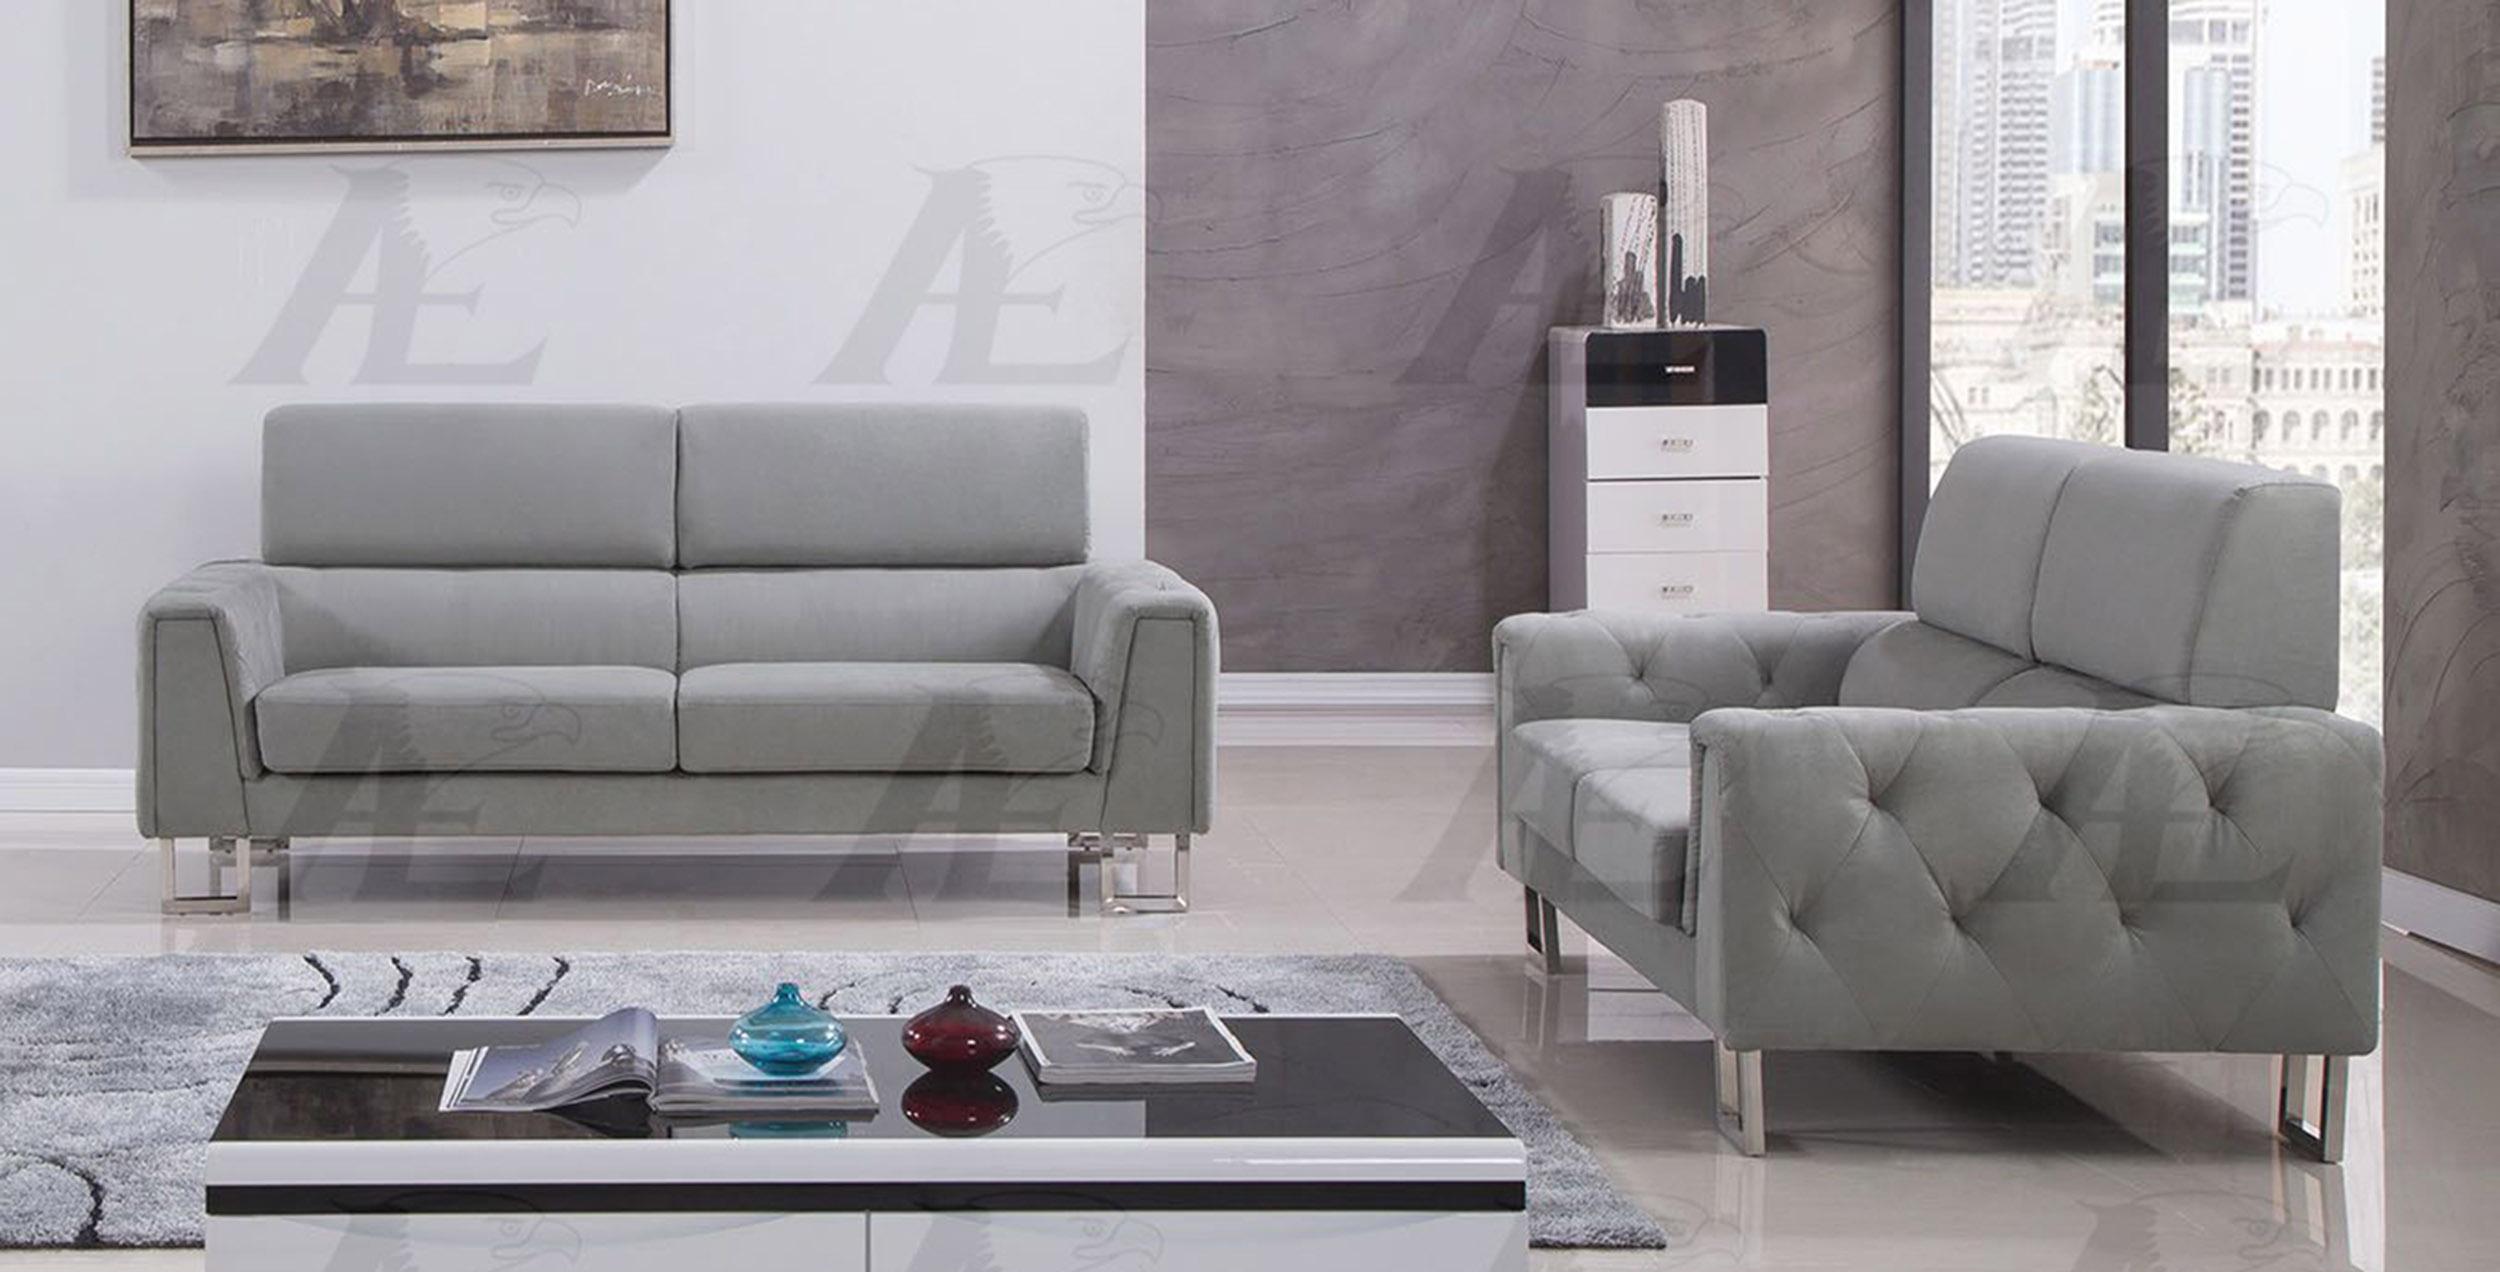 

    
American Eagle Furniture AE2369 Gray Tufted Sofa and  Loveseat Set Fabric Modern 2Pcs
